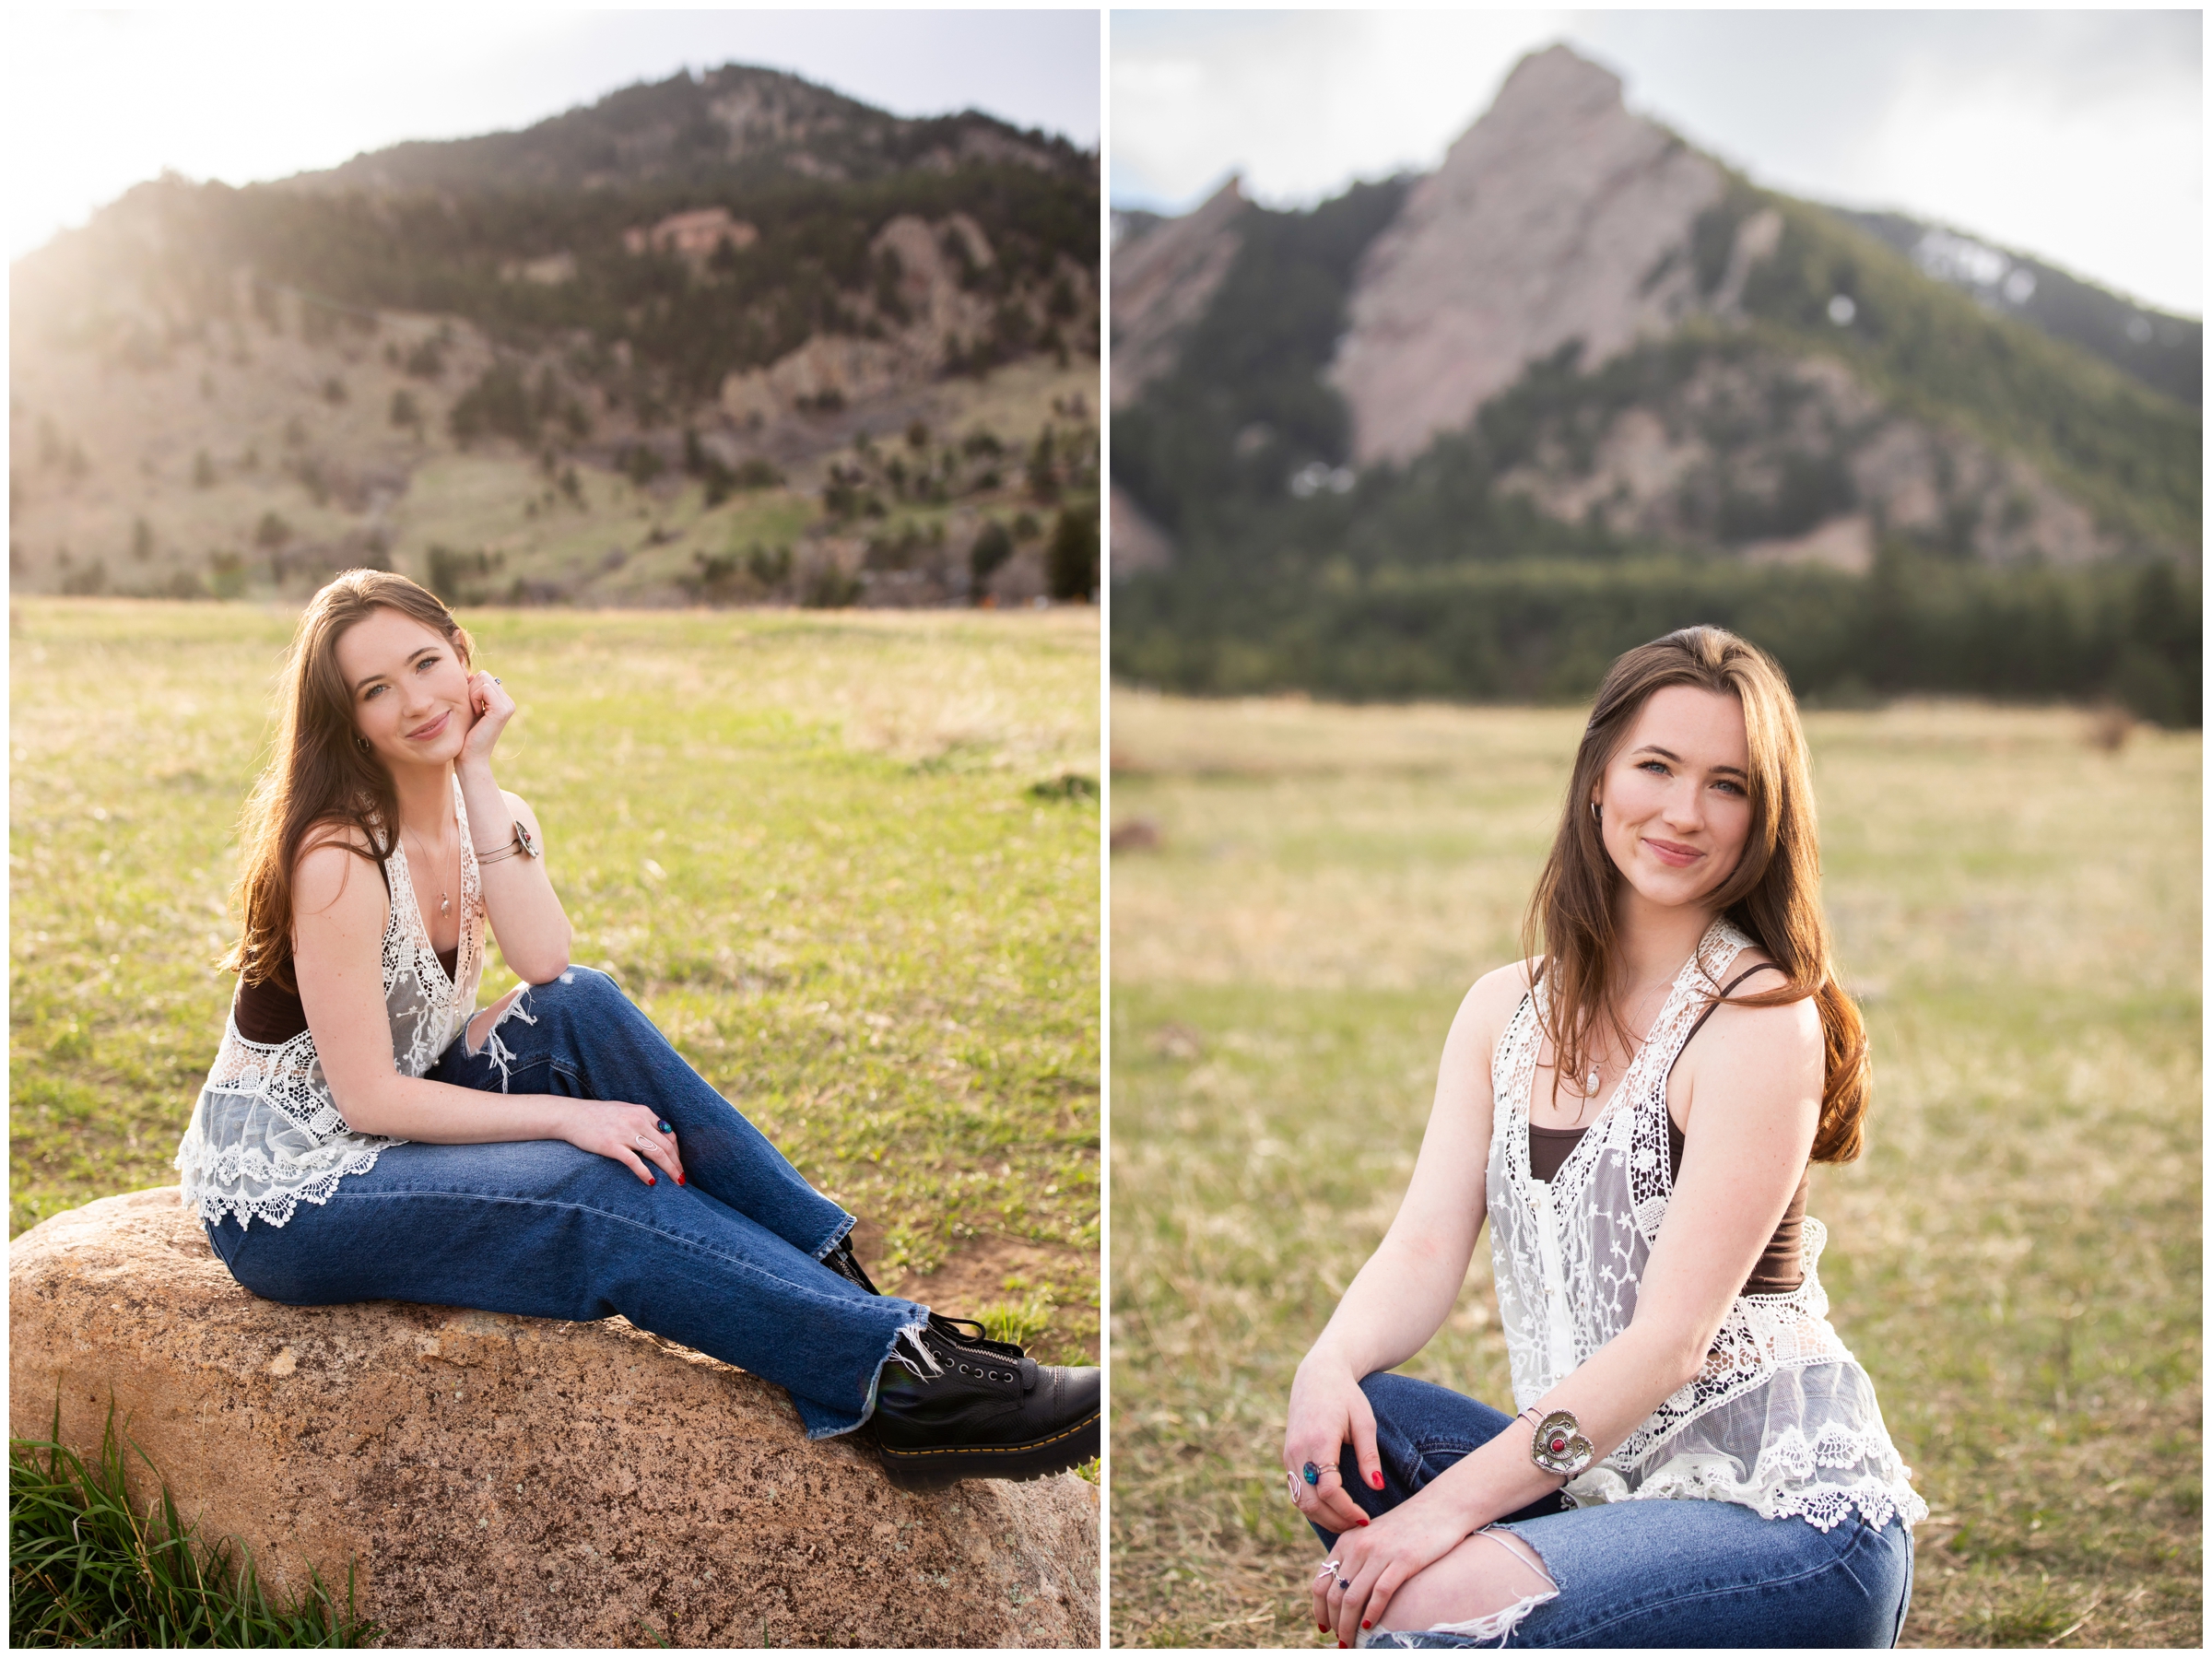 CU Boulder college senior photos at Chautauqua Park by Colorado portrait photographer Plum Pretty Photography